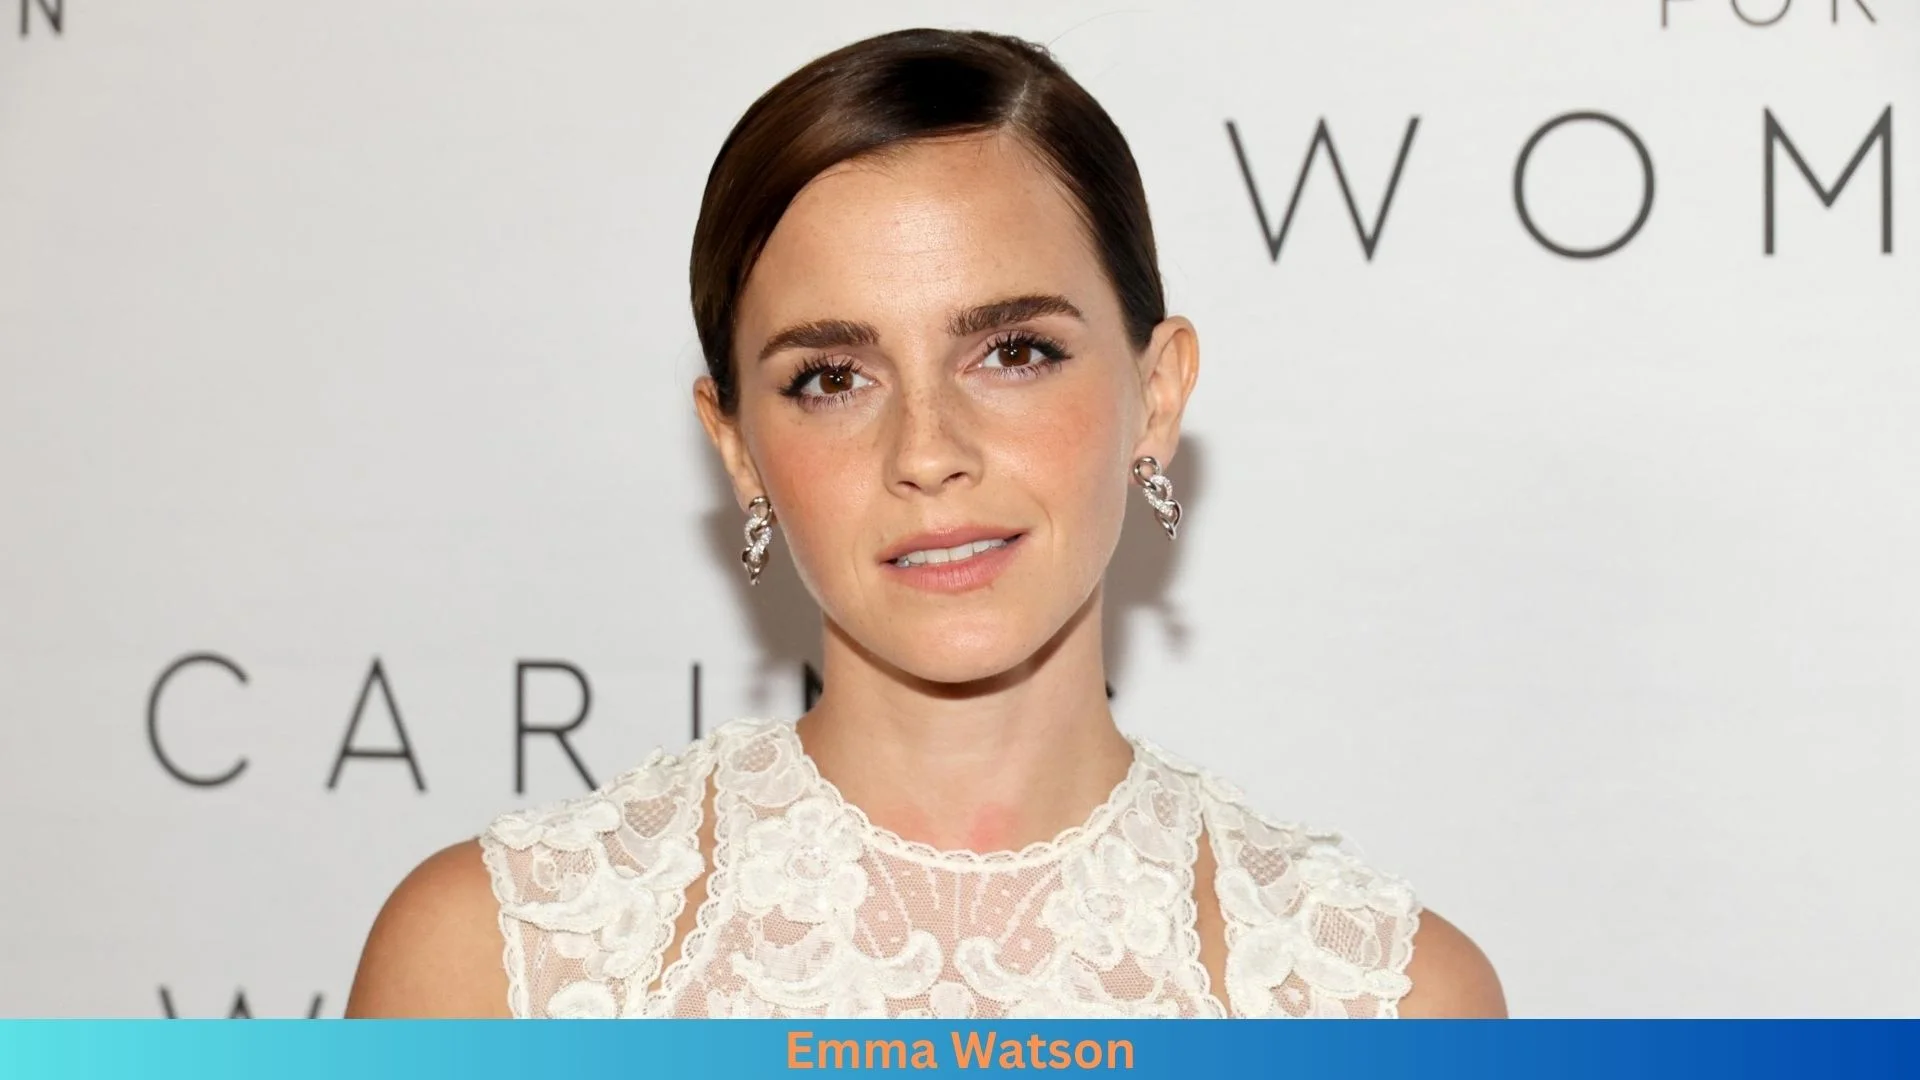 Net Worth of Emma Watson